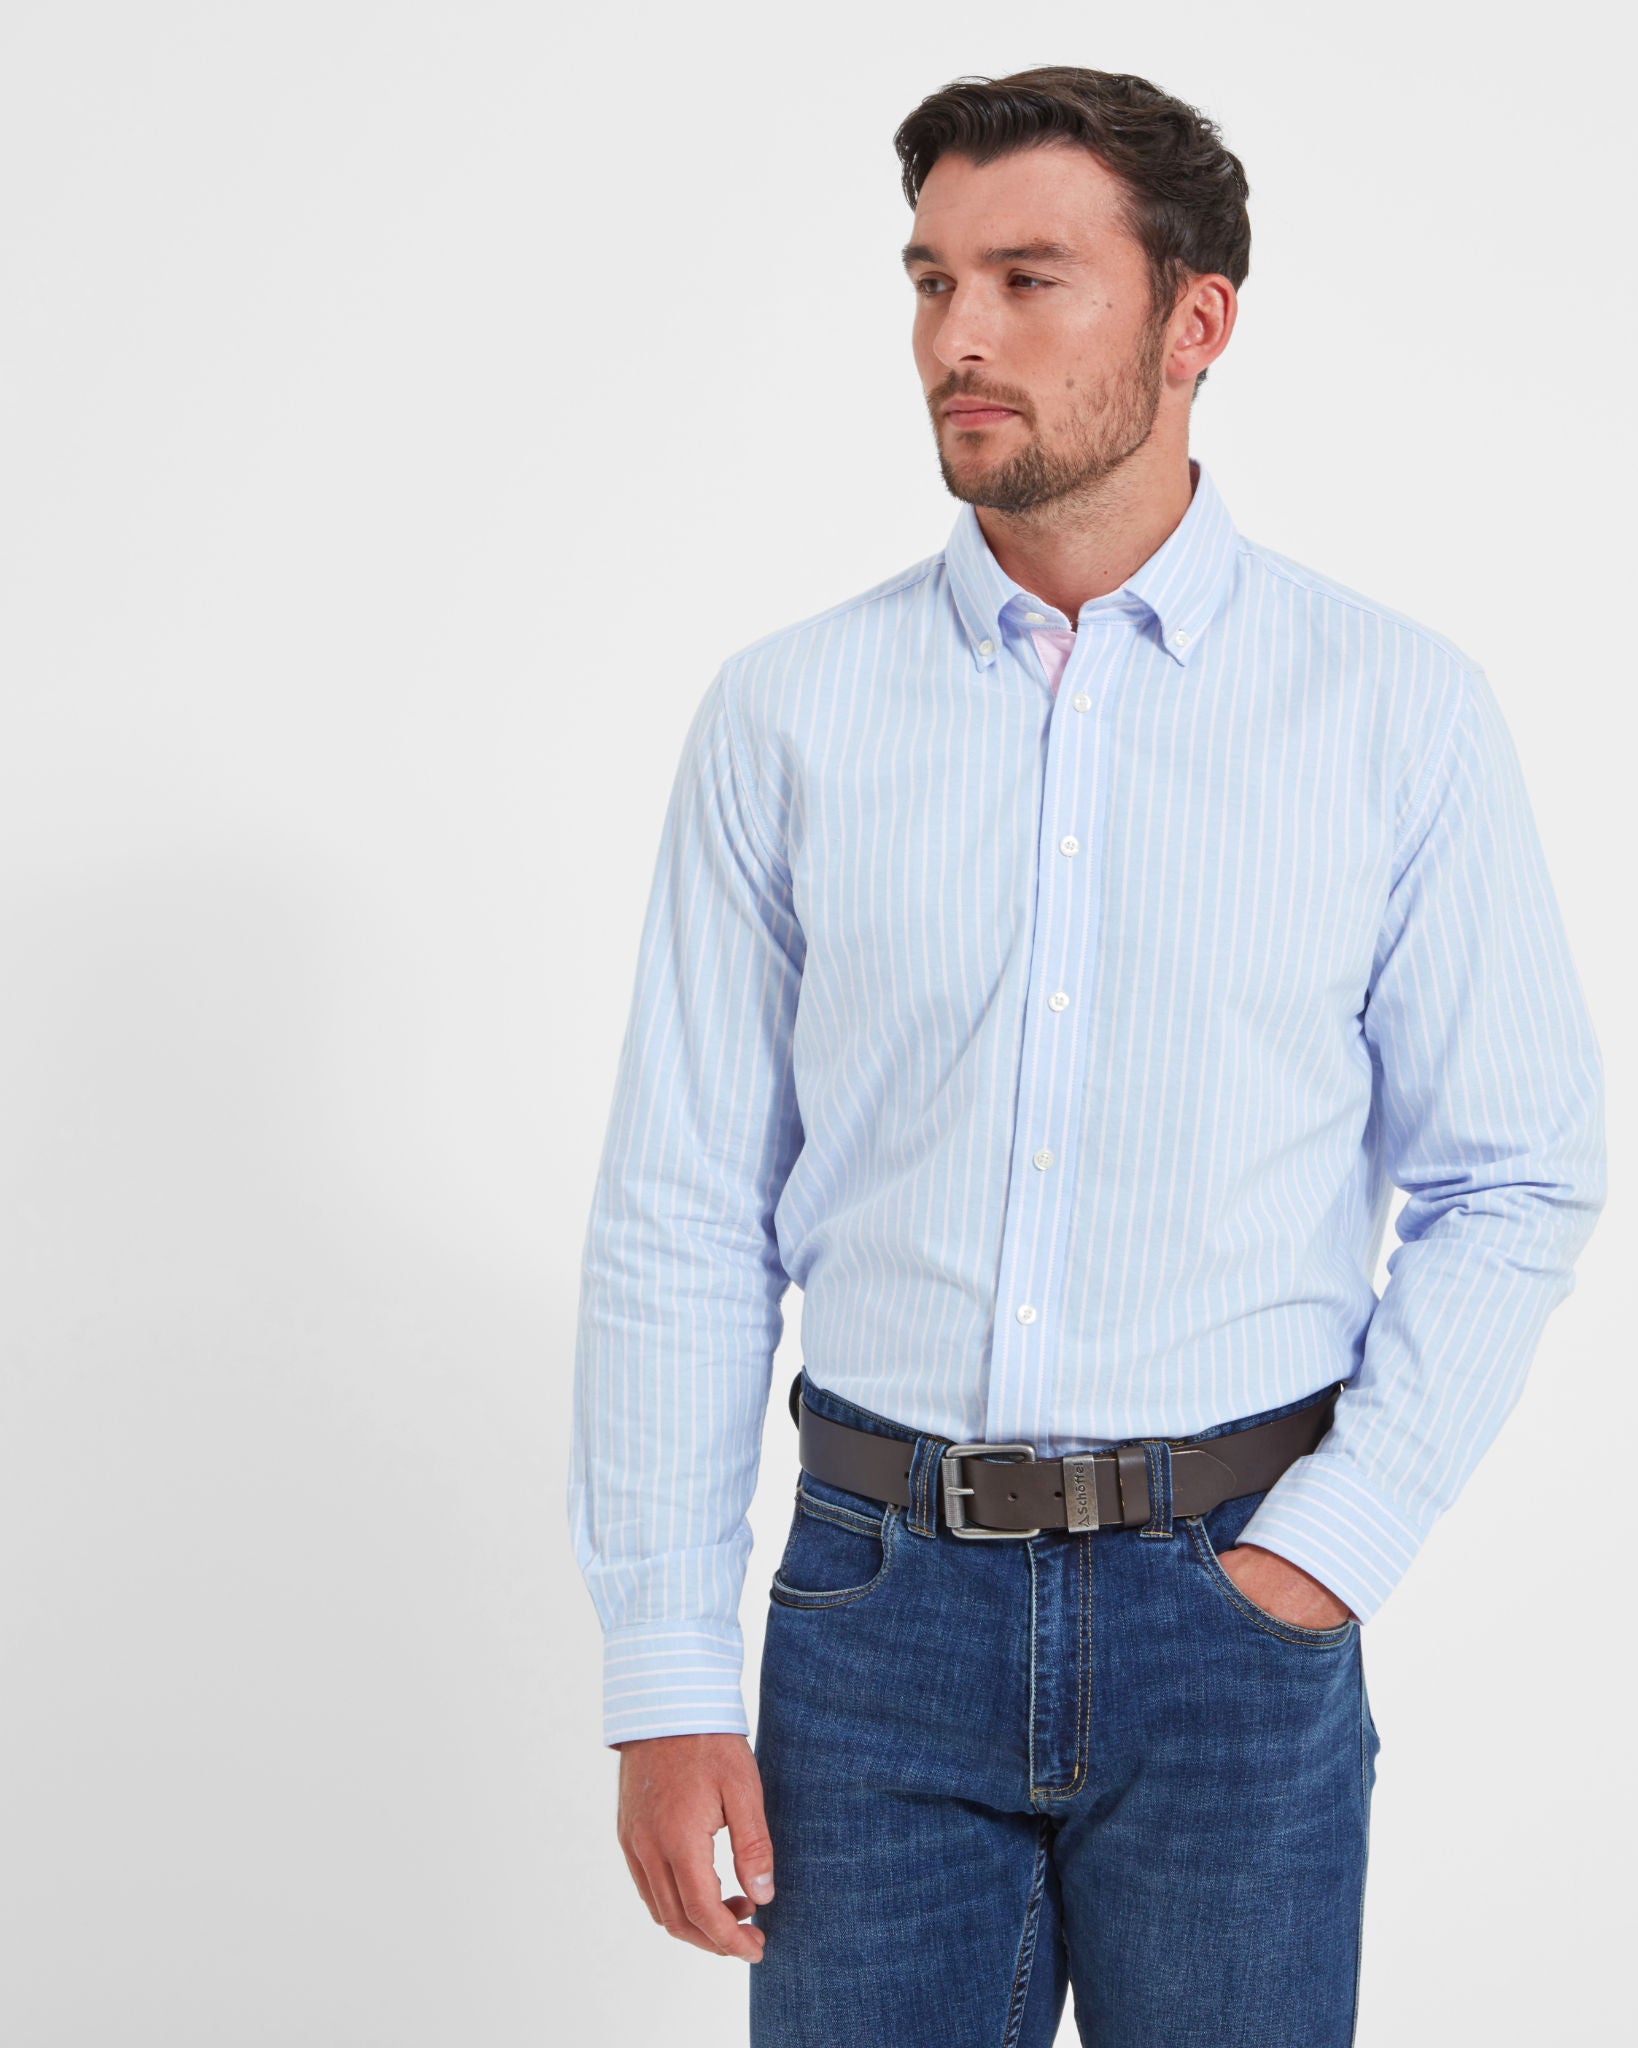 Holt Soft Oxford Tailored Shirt - Blue/Pink Stripe